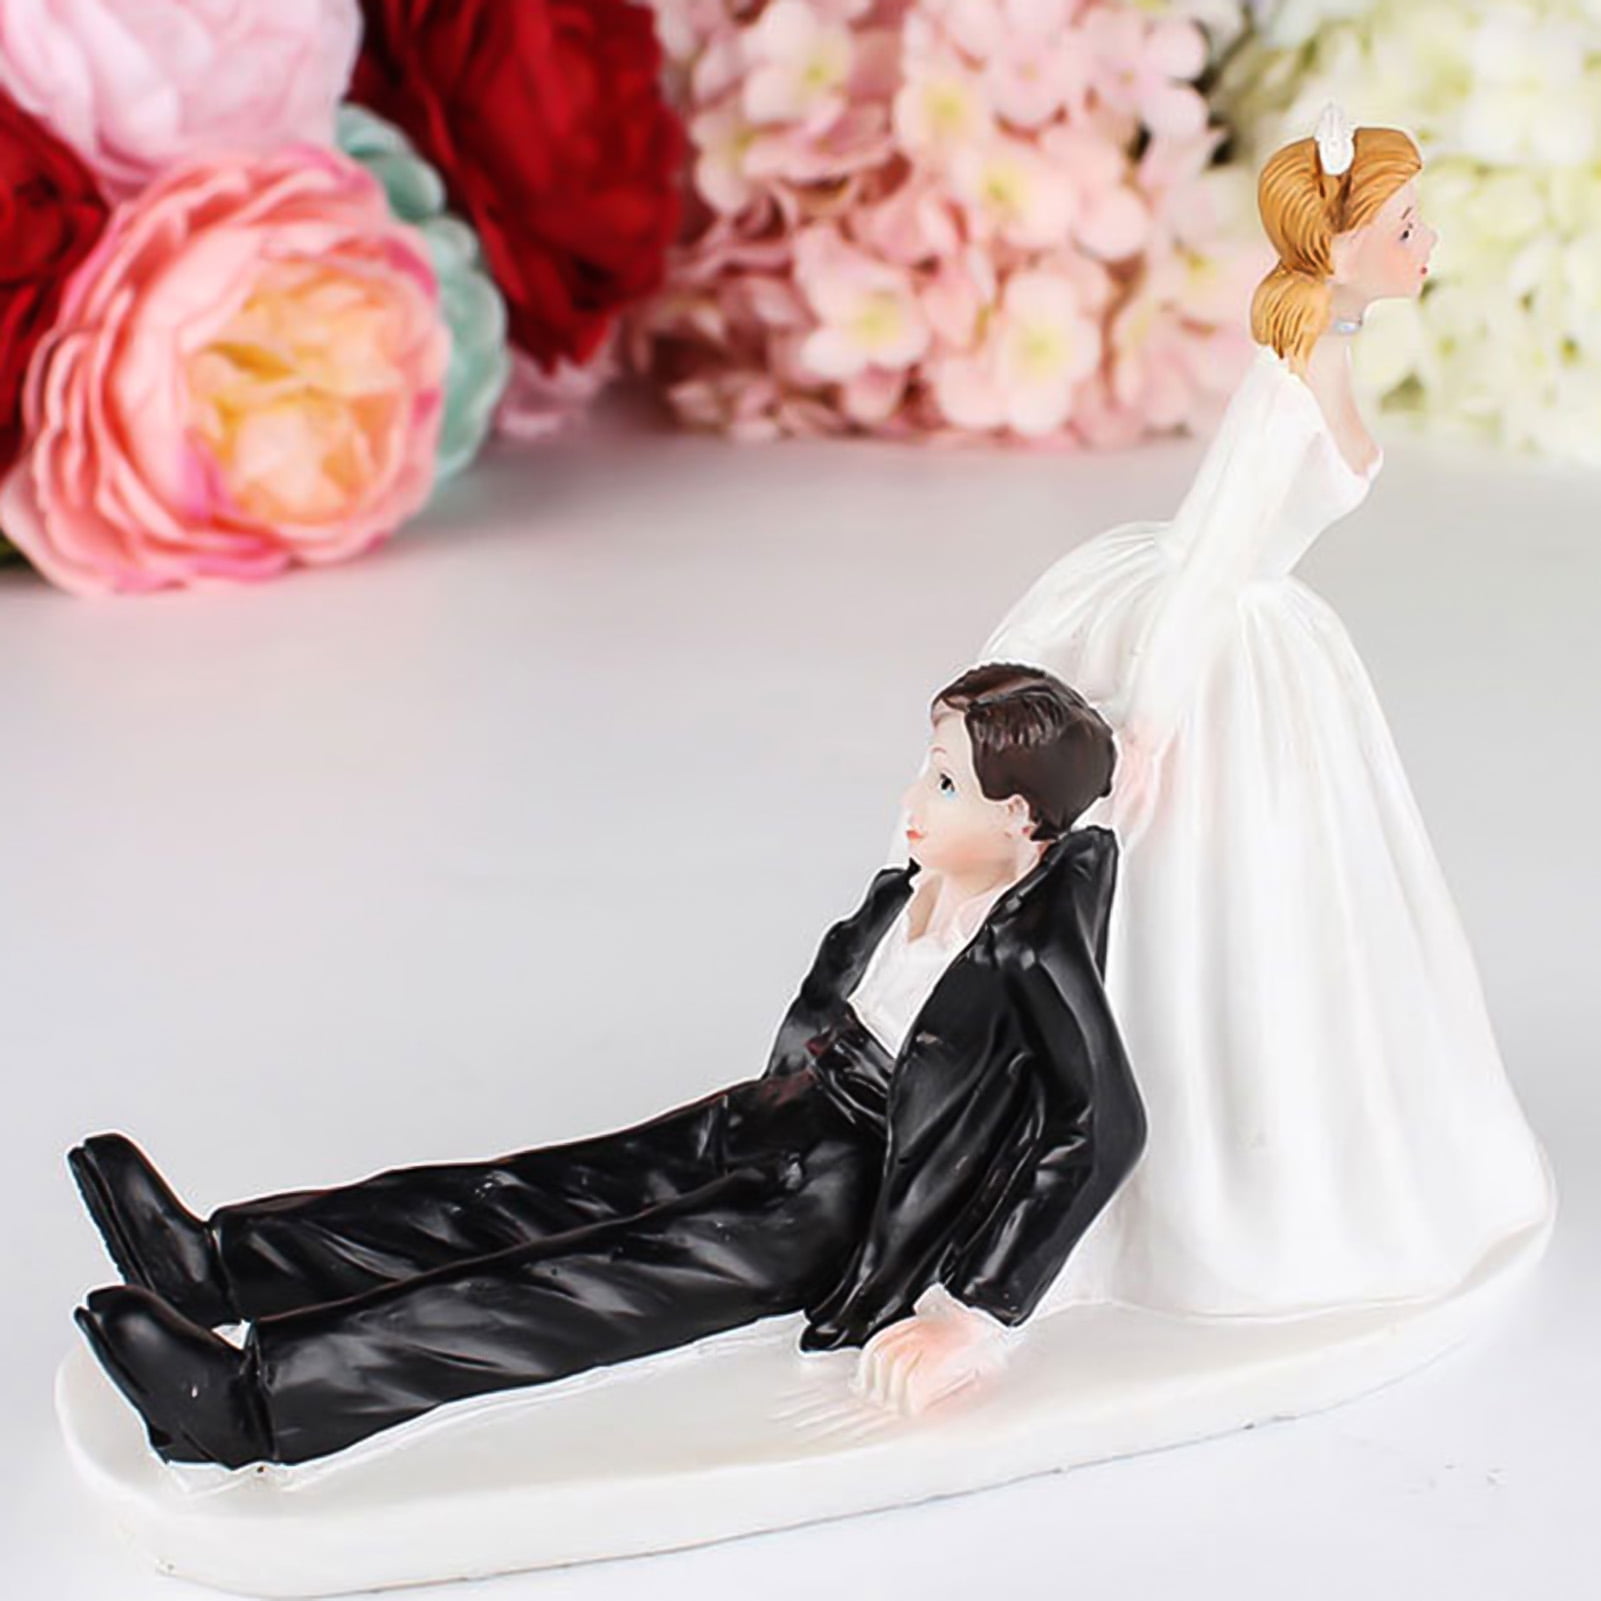 Wedding Cake Topper Funny Bride And Groom Novelty Figurine Mr & Mrs Decoration 